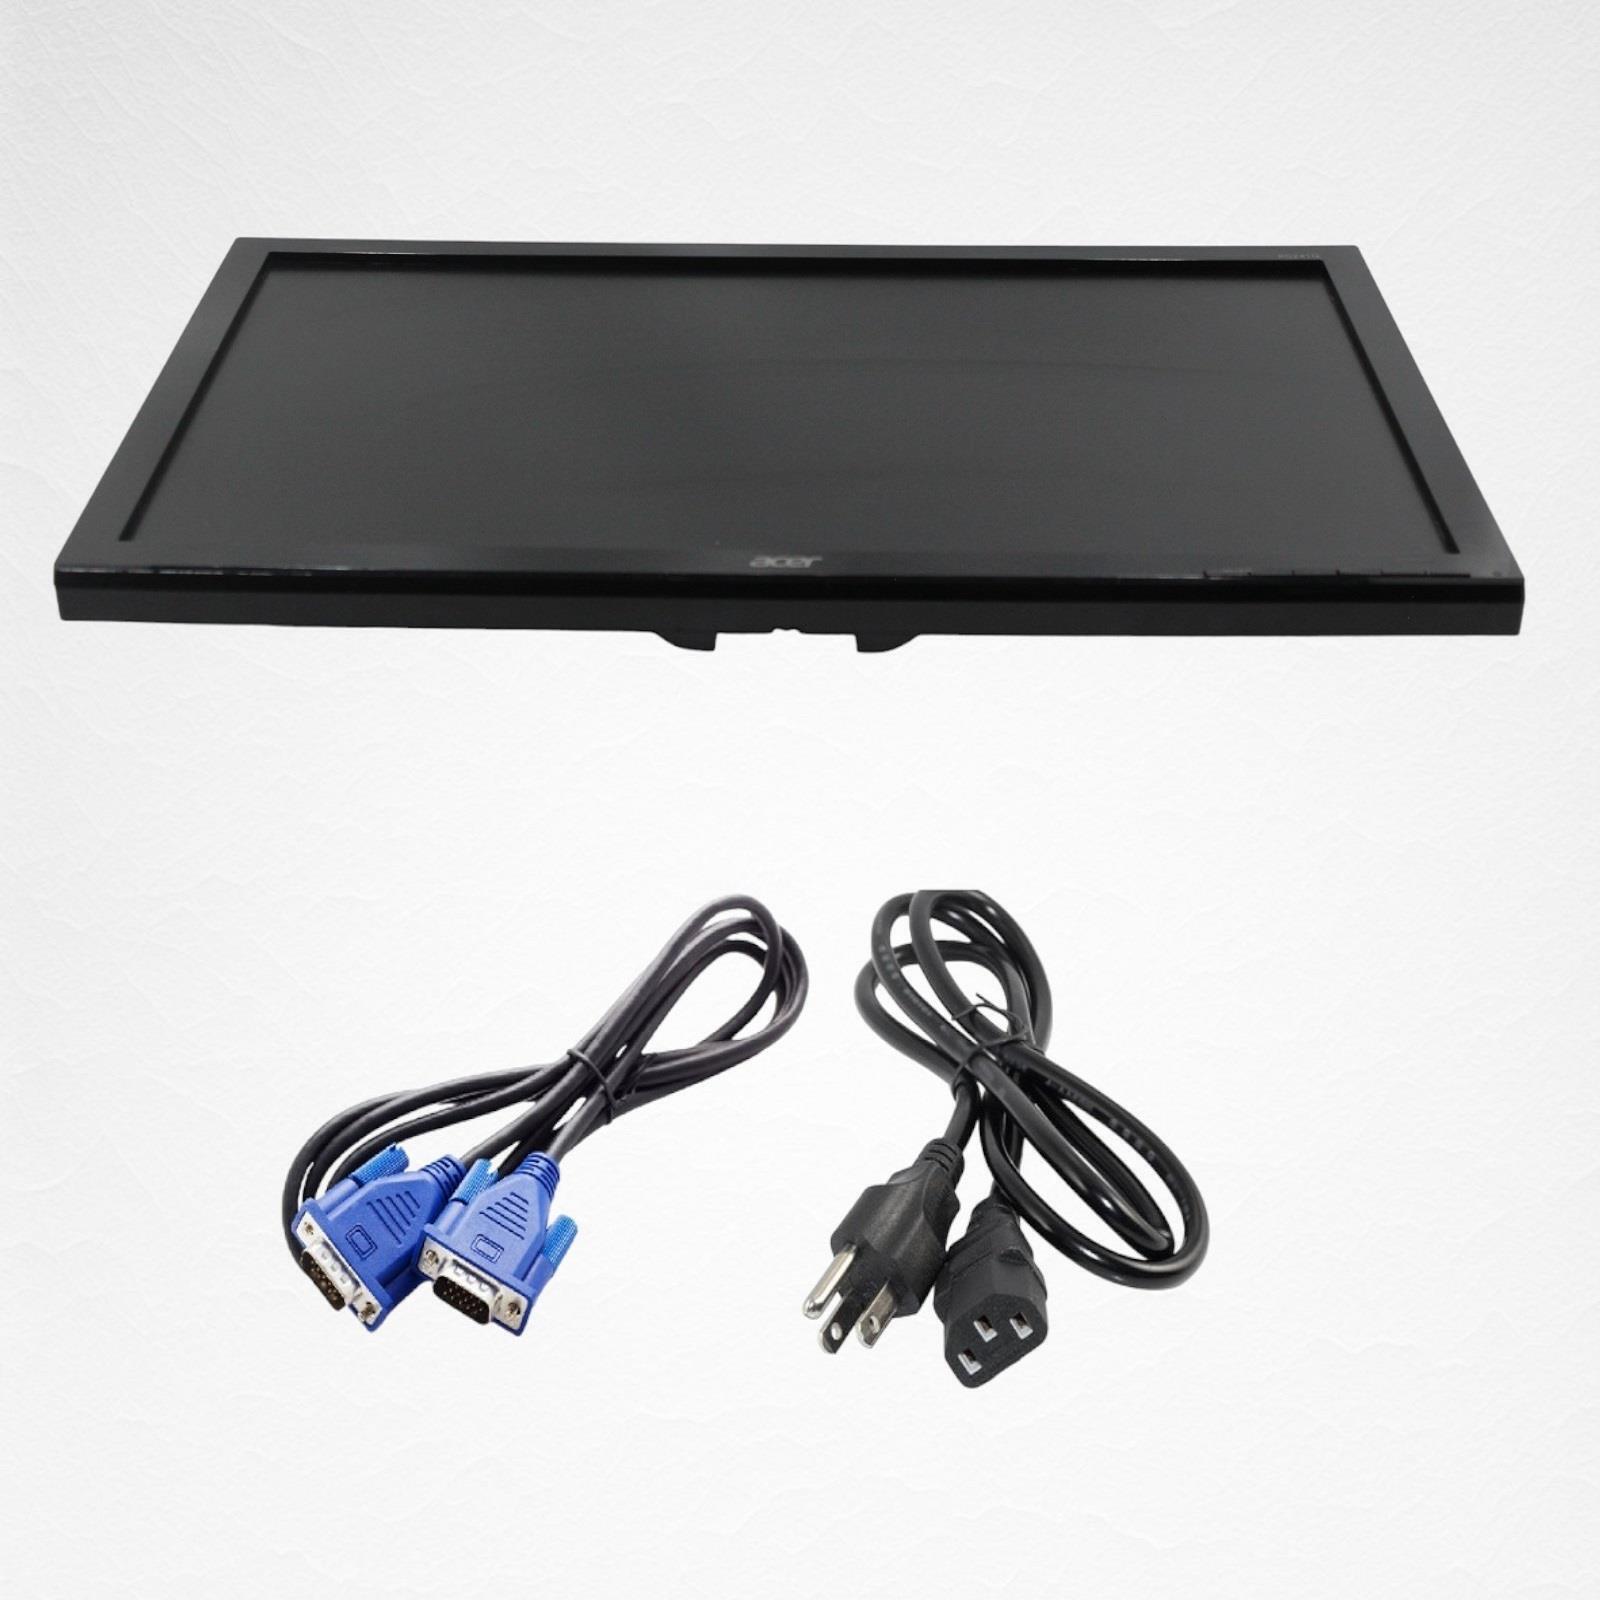 Acer KG241Q bmiix FHD 1080p 75Hz LED Backlit LCD Monitor VGA HDMI No Stand